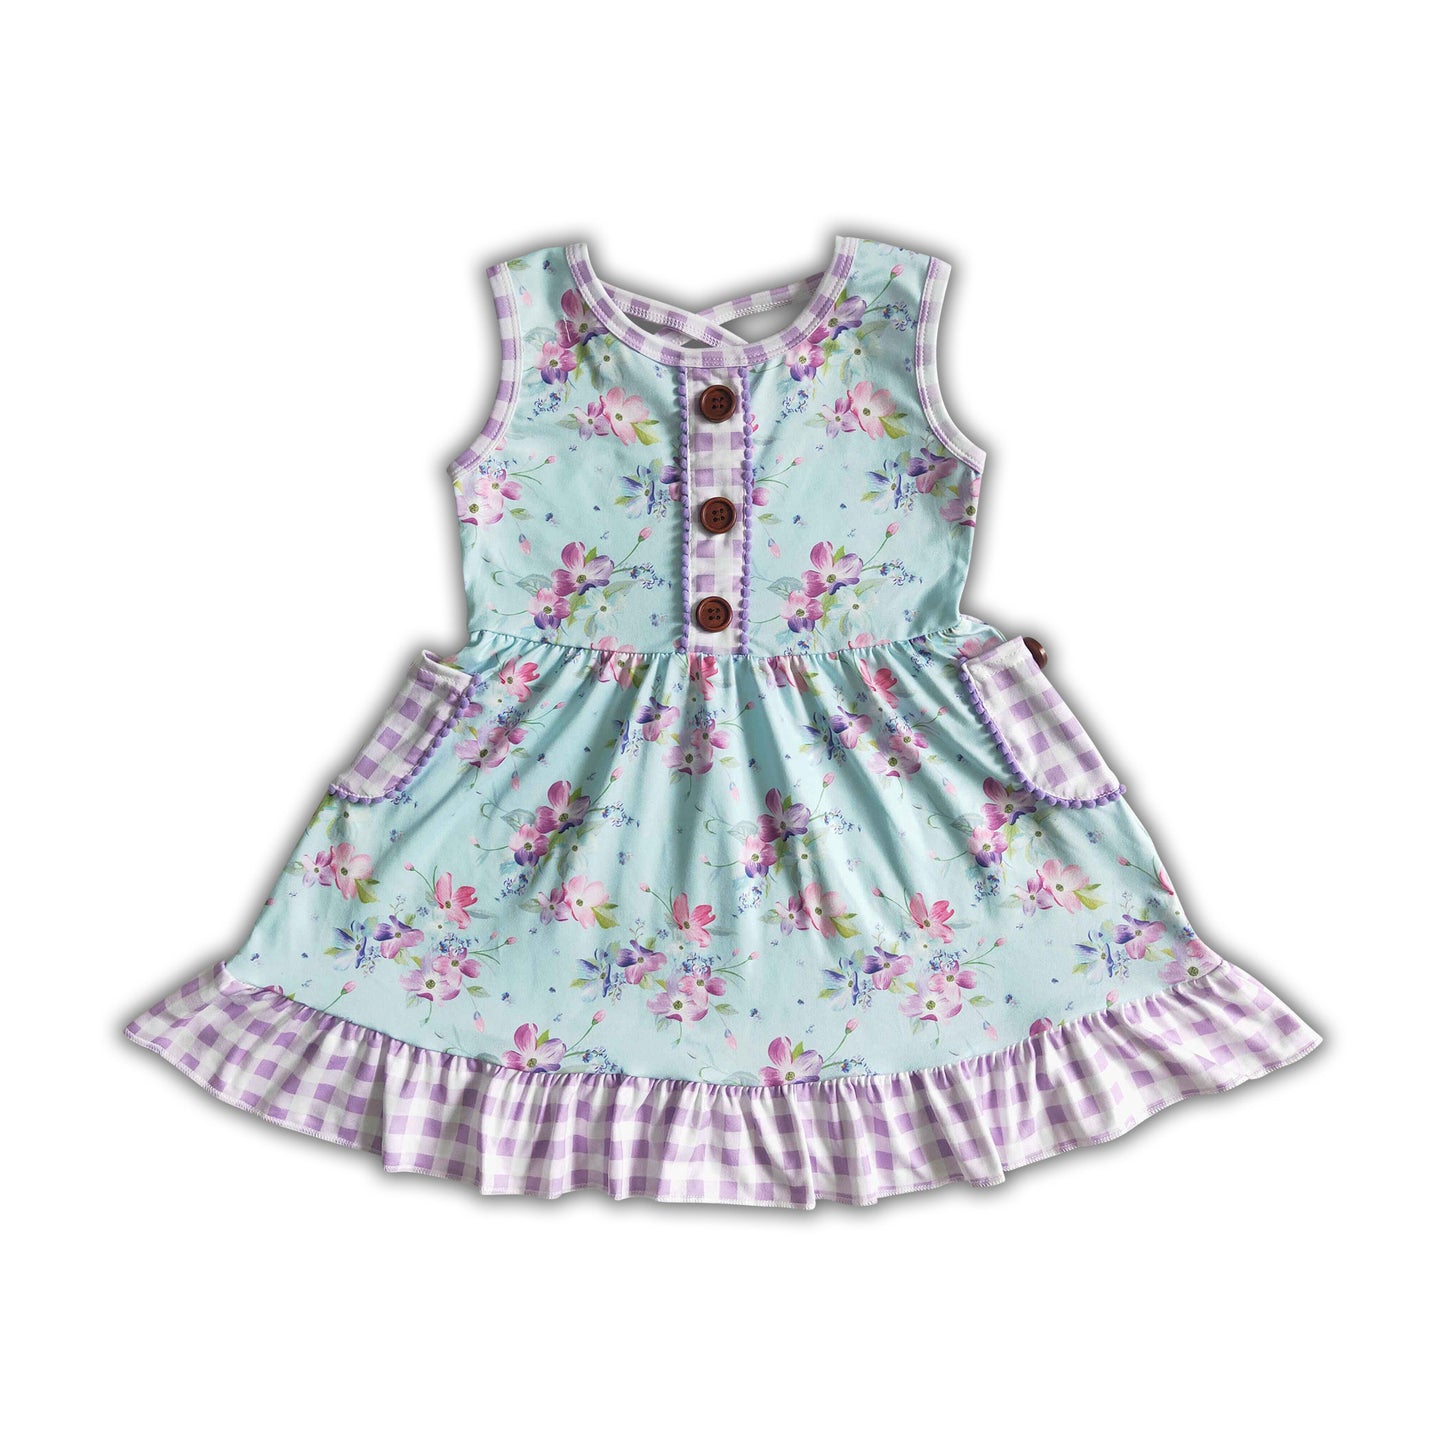 Sleeveless floral lavender pocket girls dresses